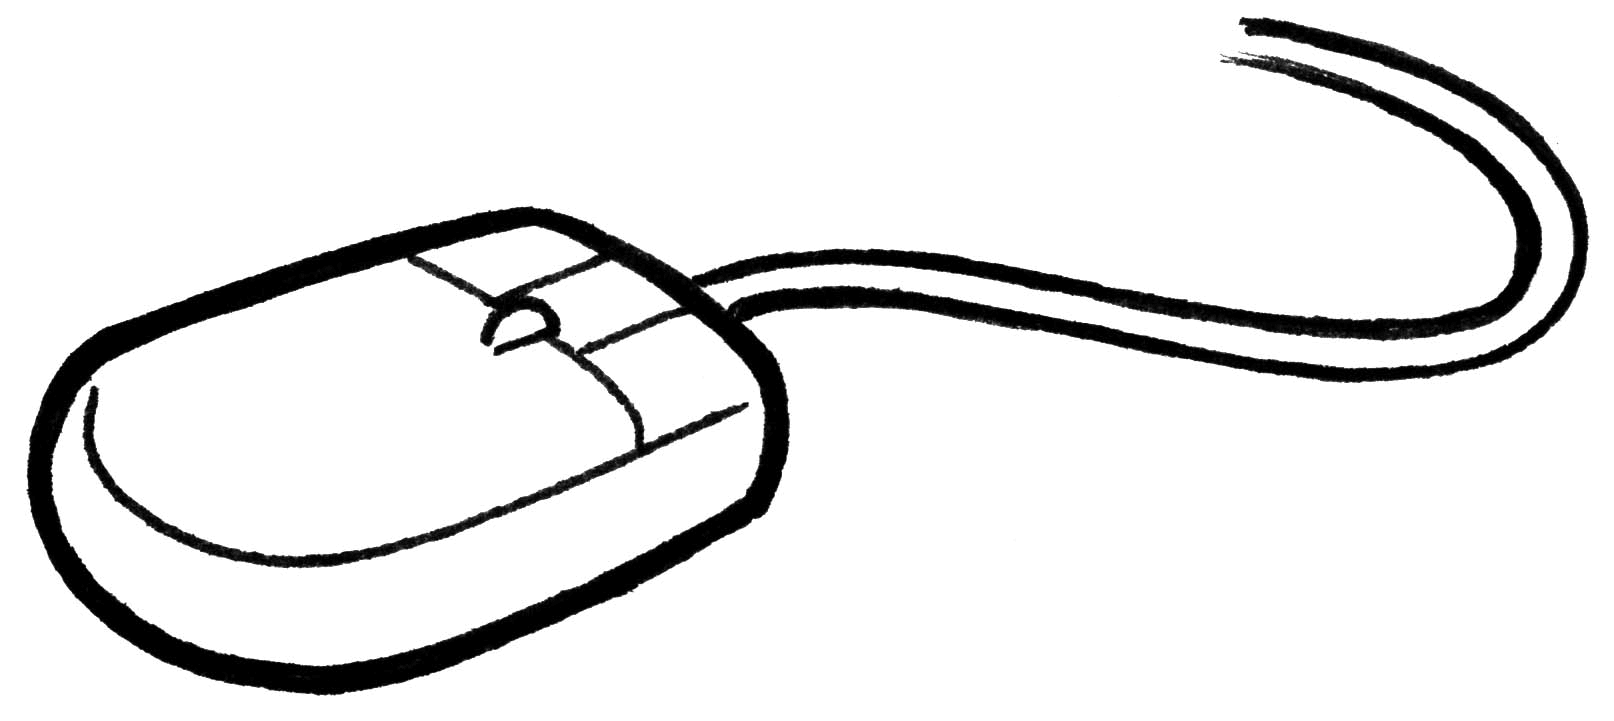 Computer mouse cartoon clipart